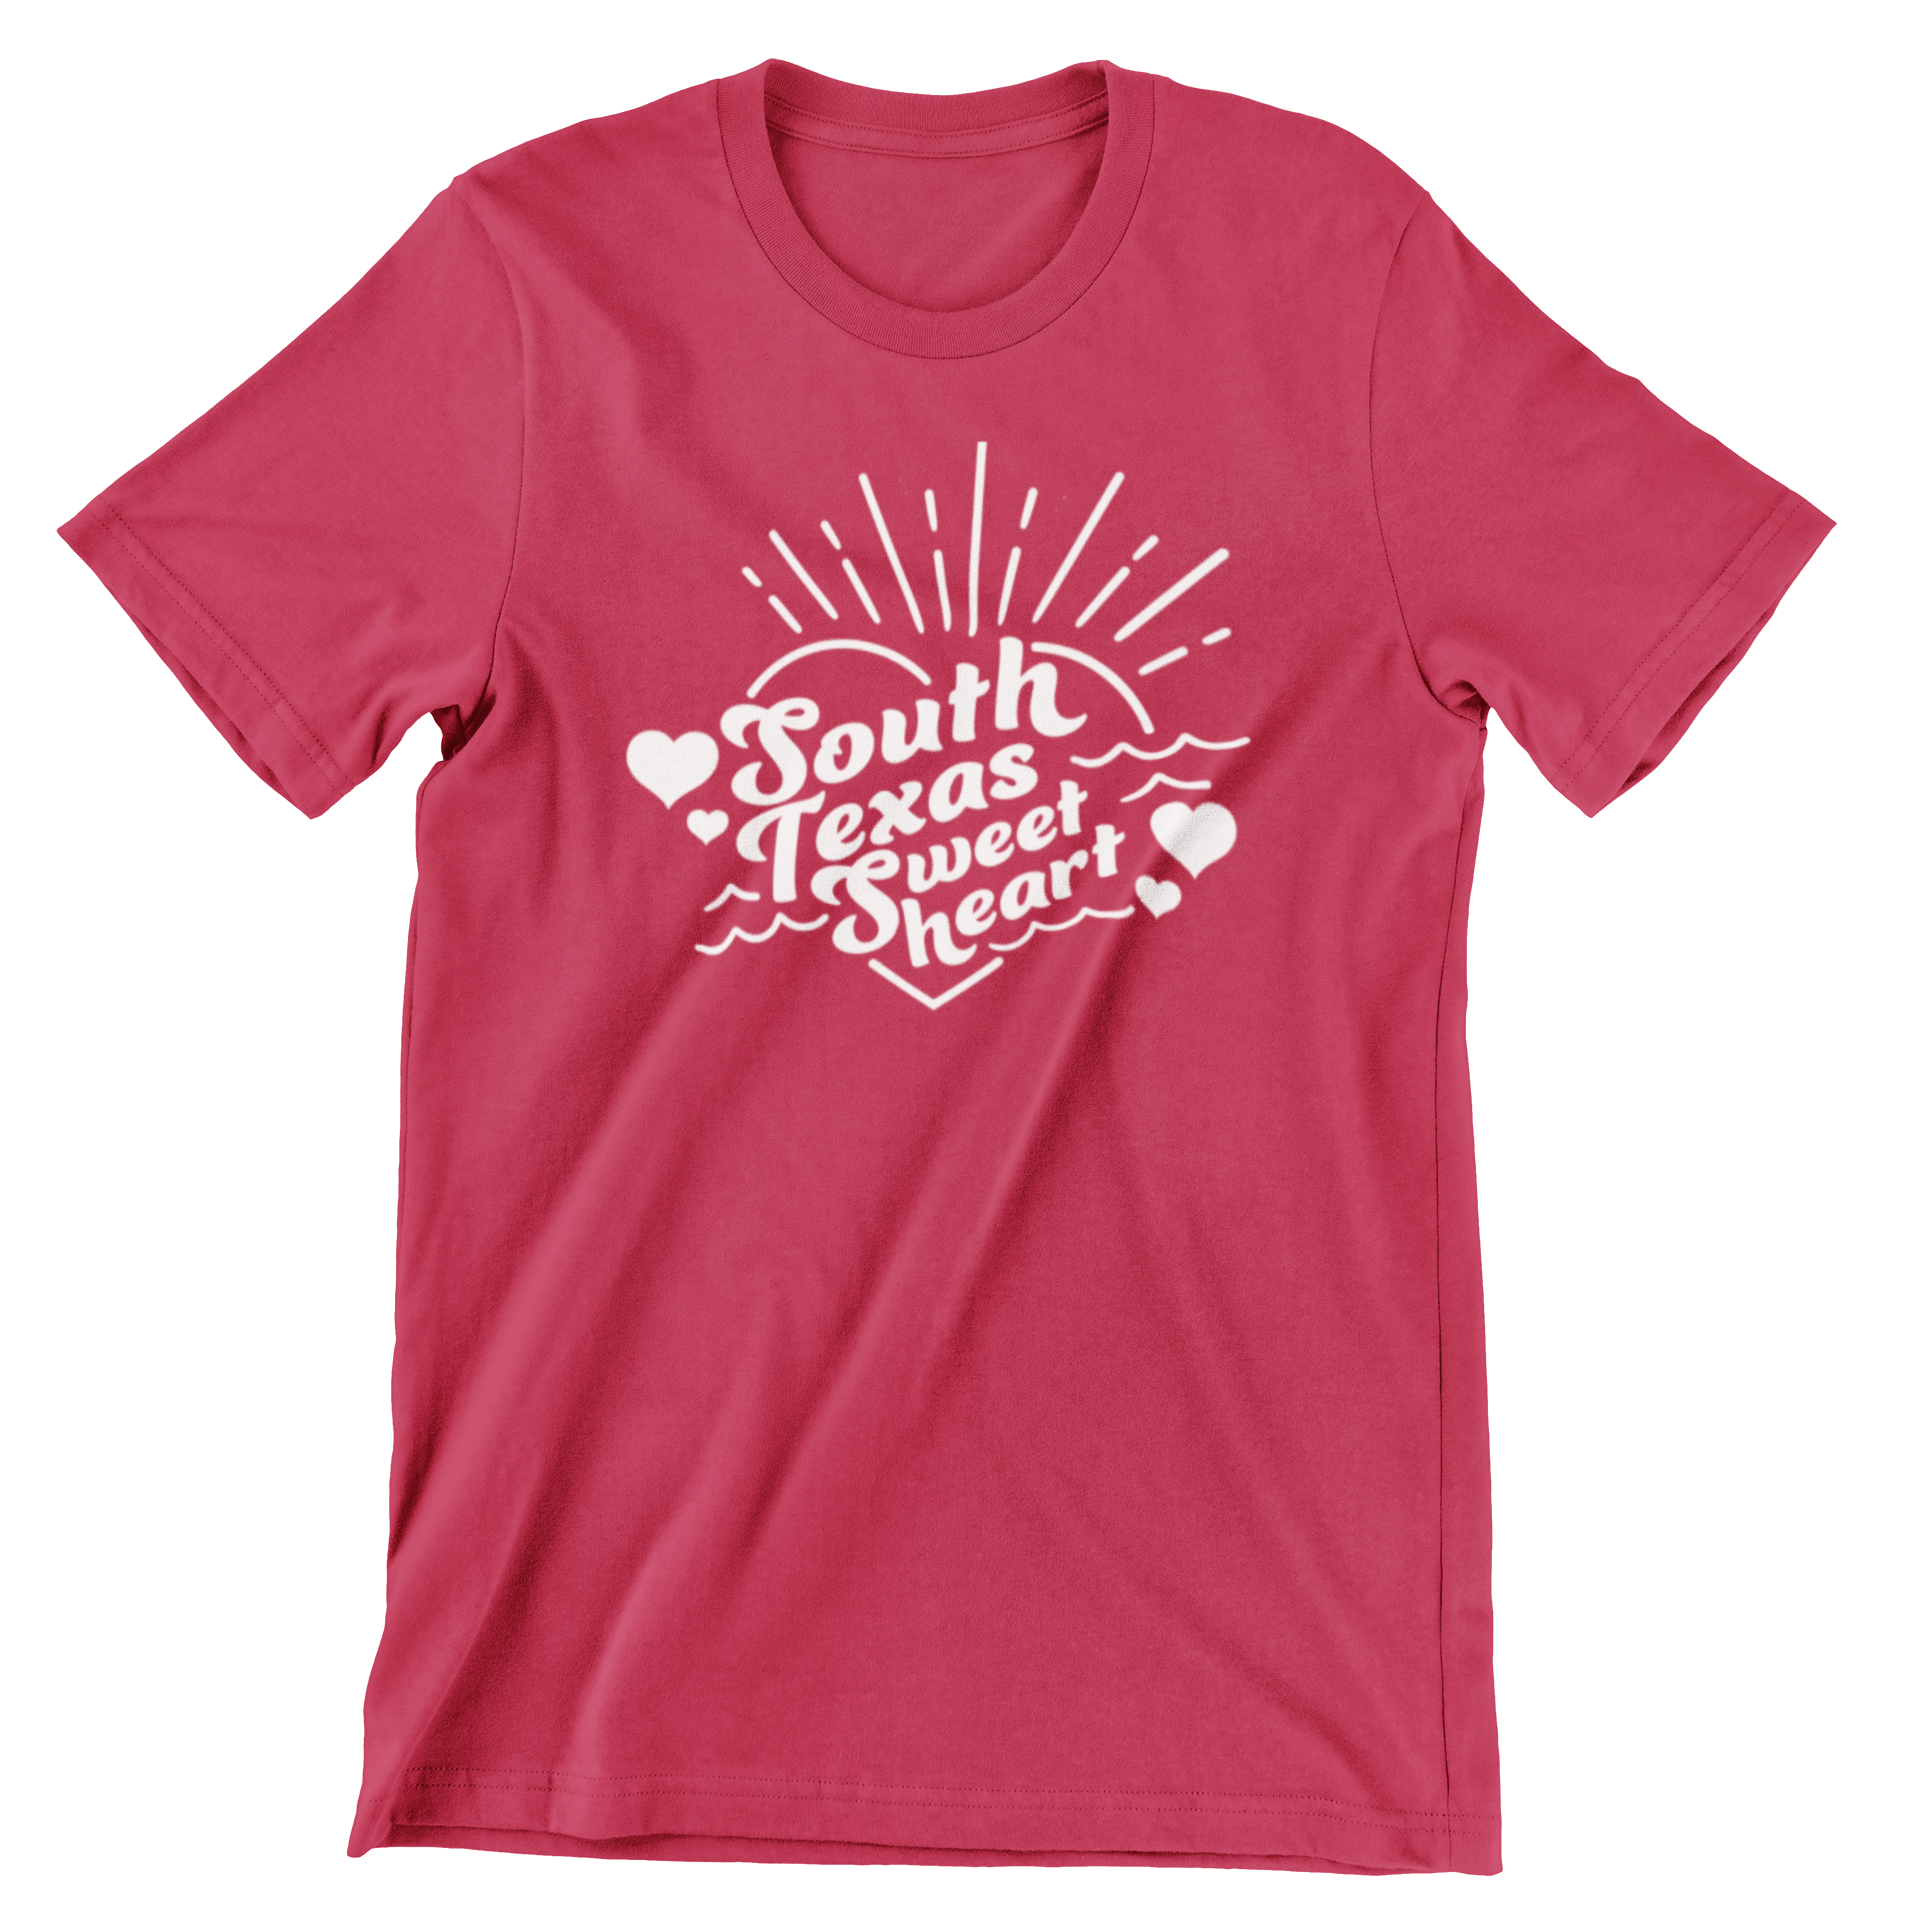 South Texas Sweethearts T-shirt